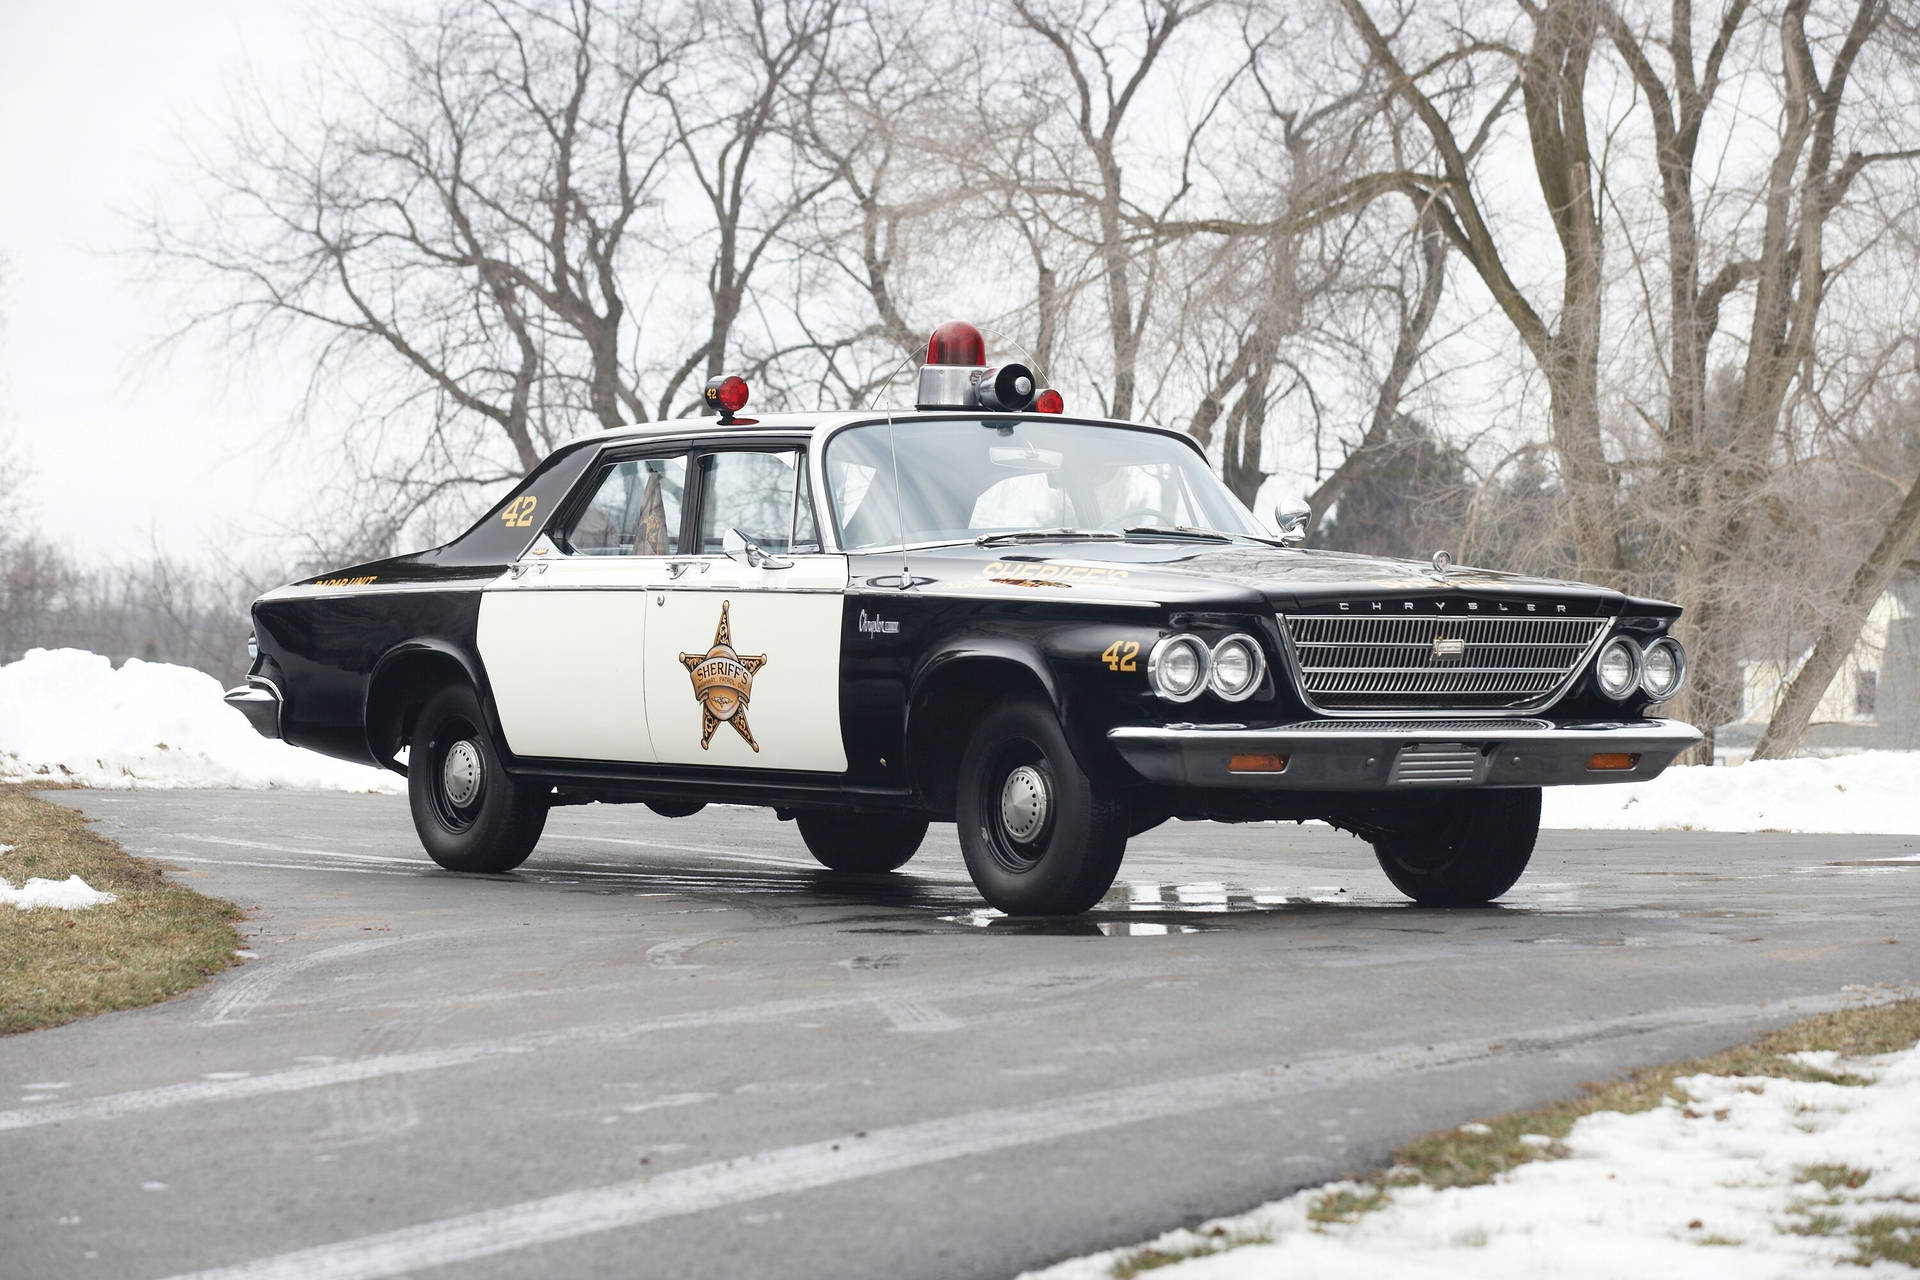 Official Chrysler Sheriff Patrol Car